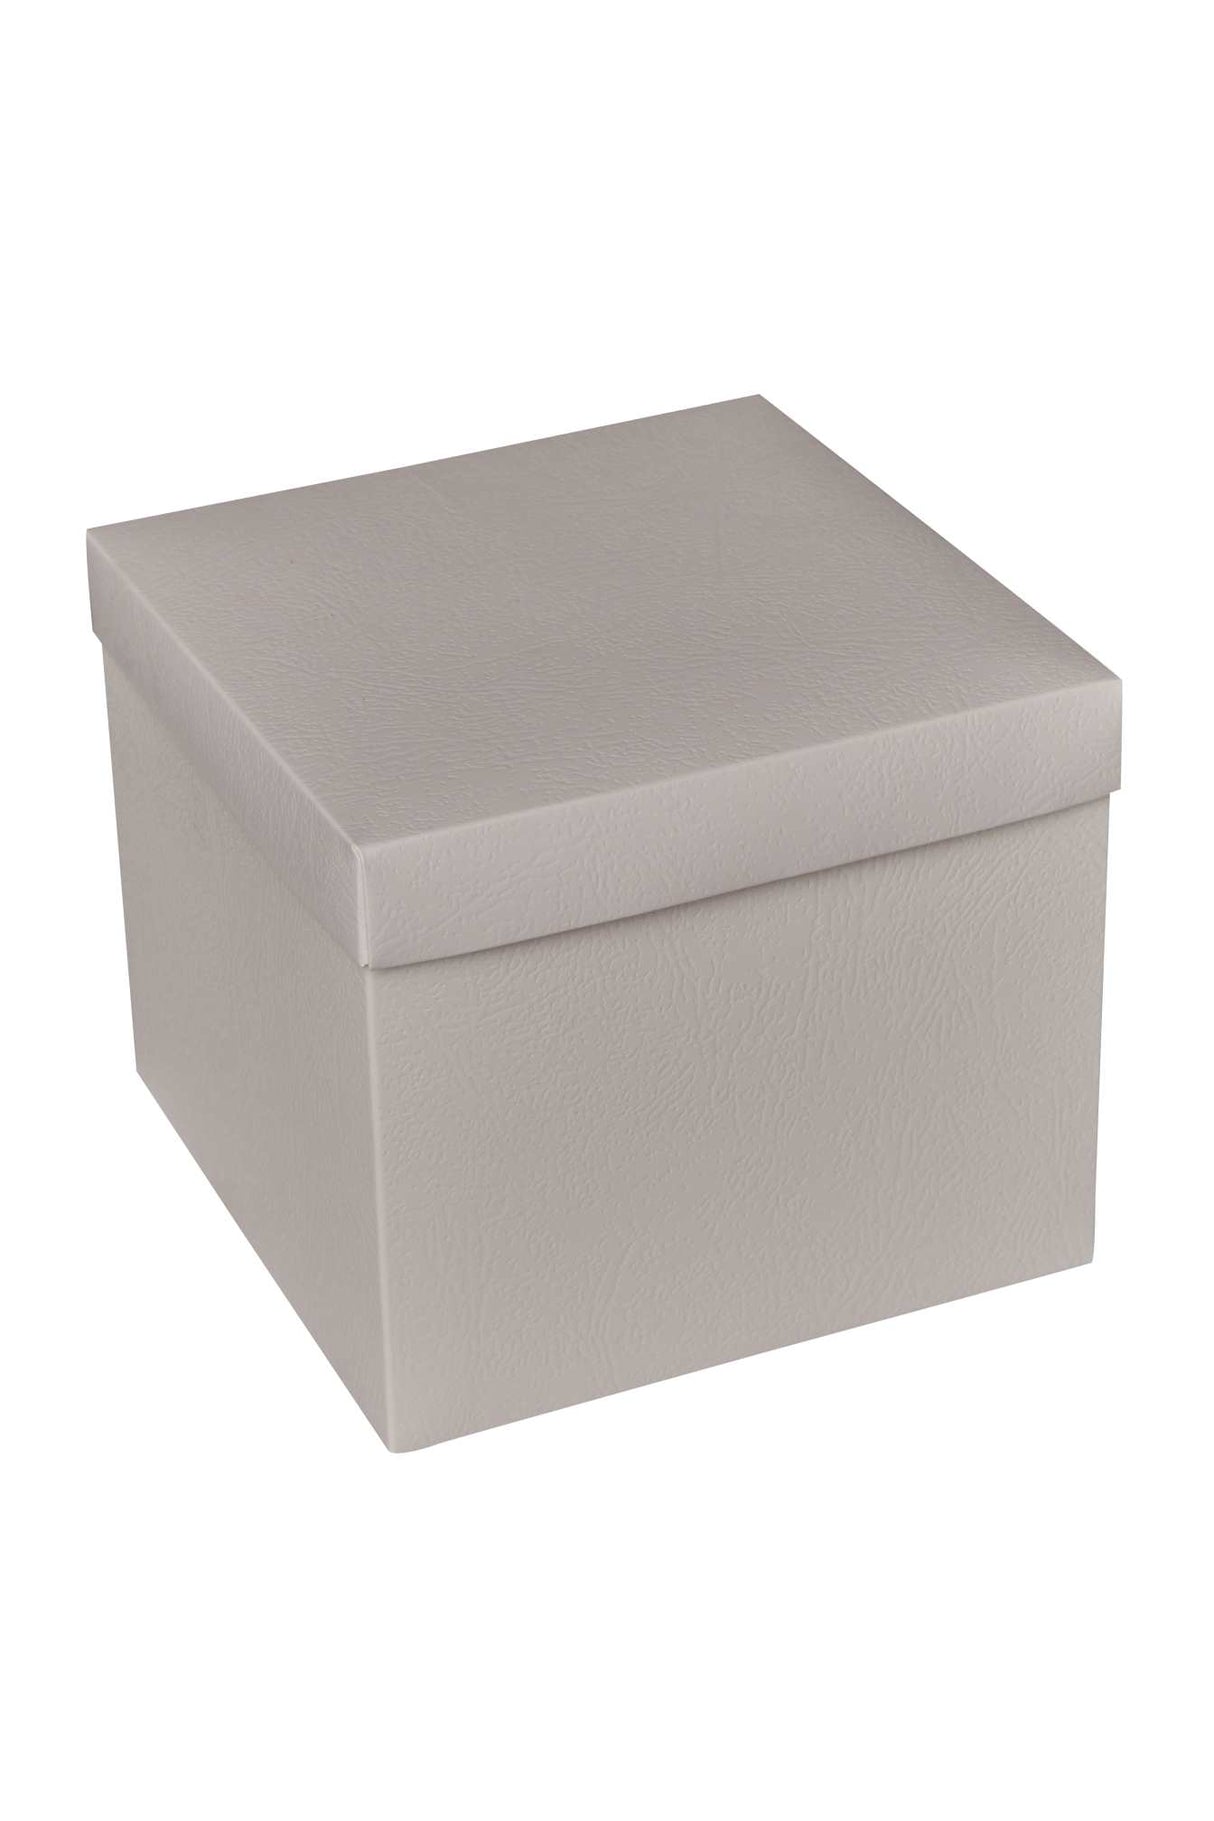 Confetti Box 14 x 14 x 12 CM White 10 Pcs 